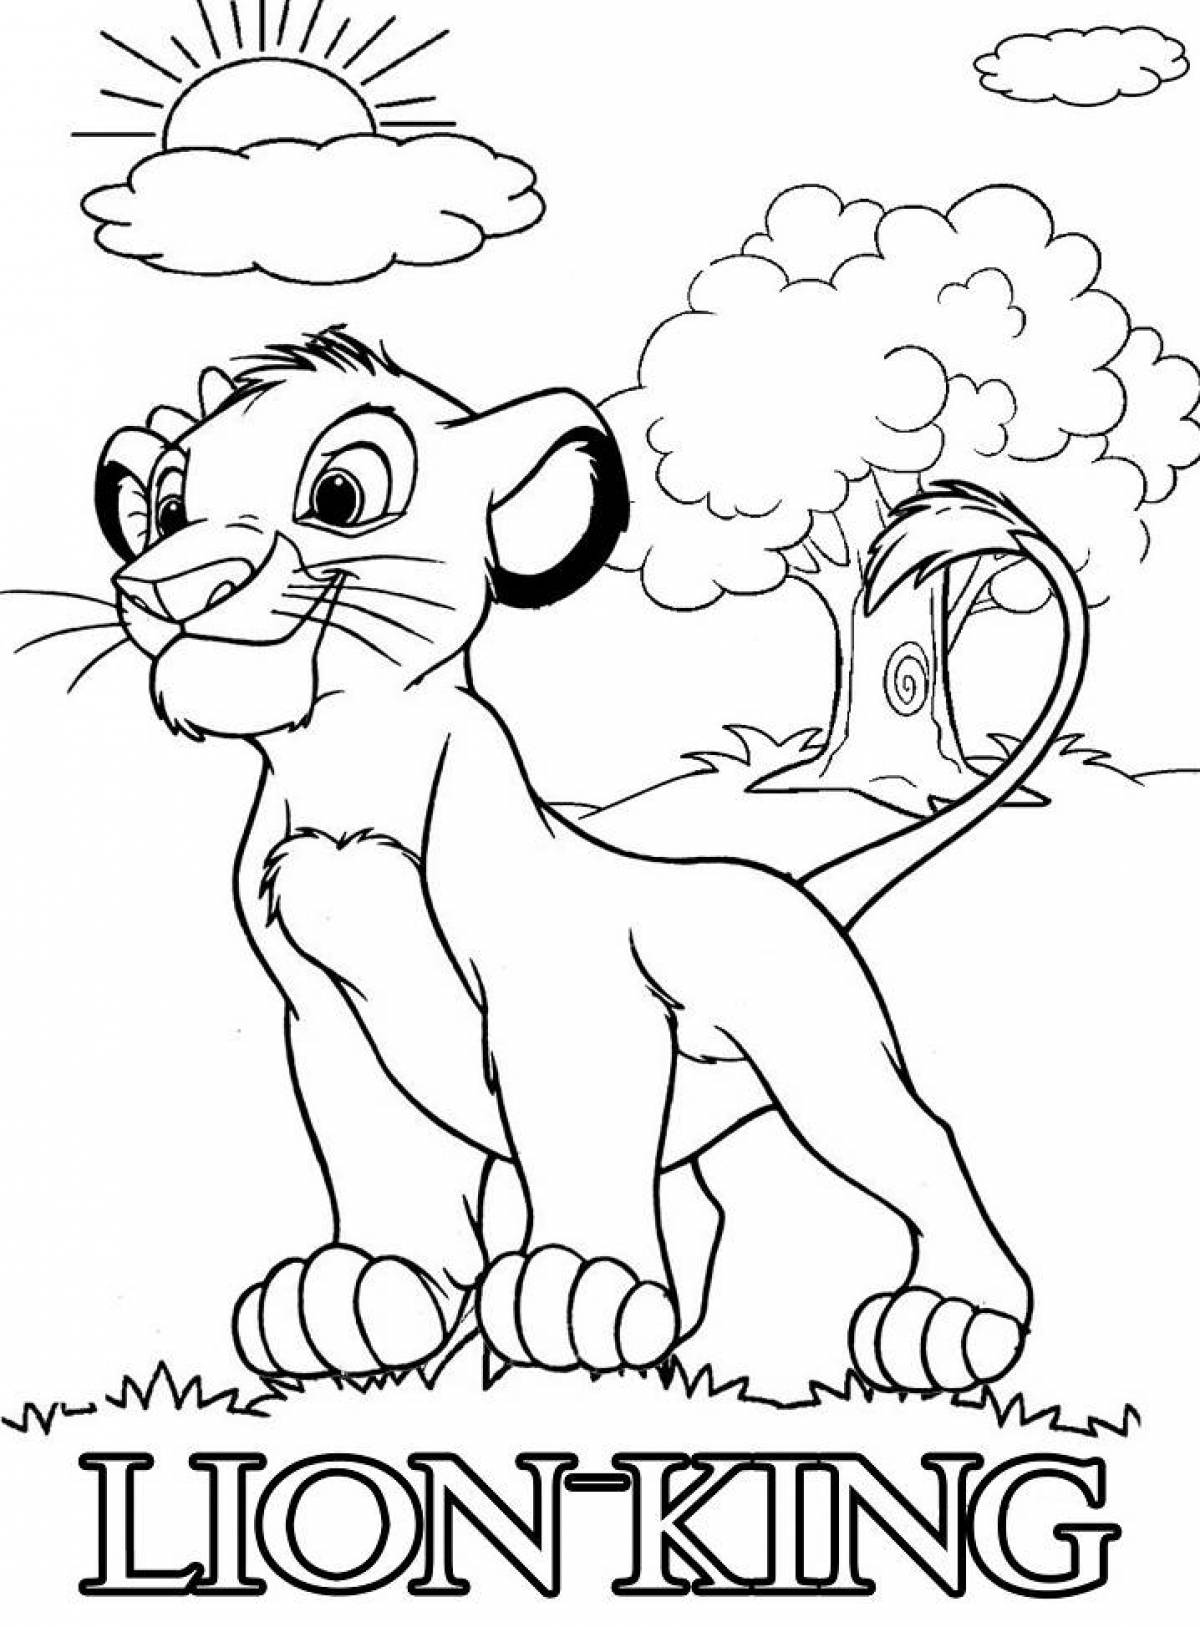 Impressive lion king coloring book